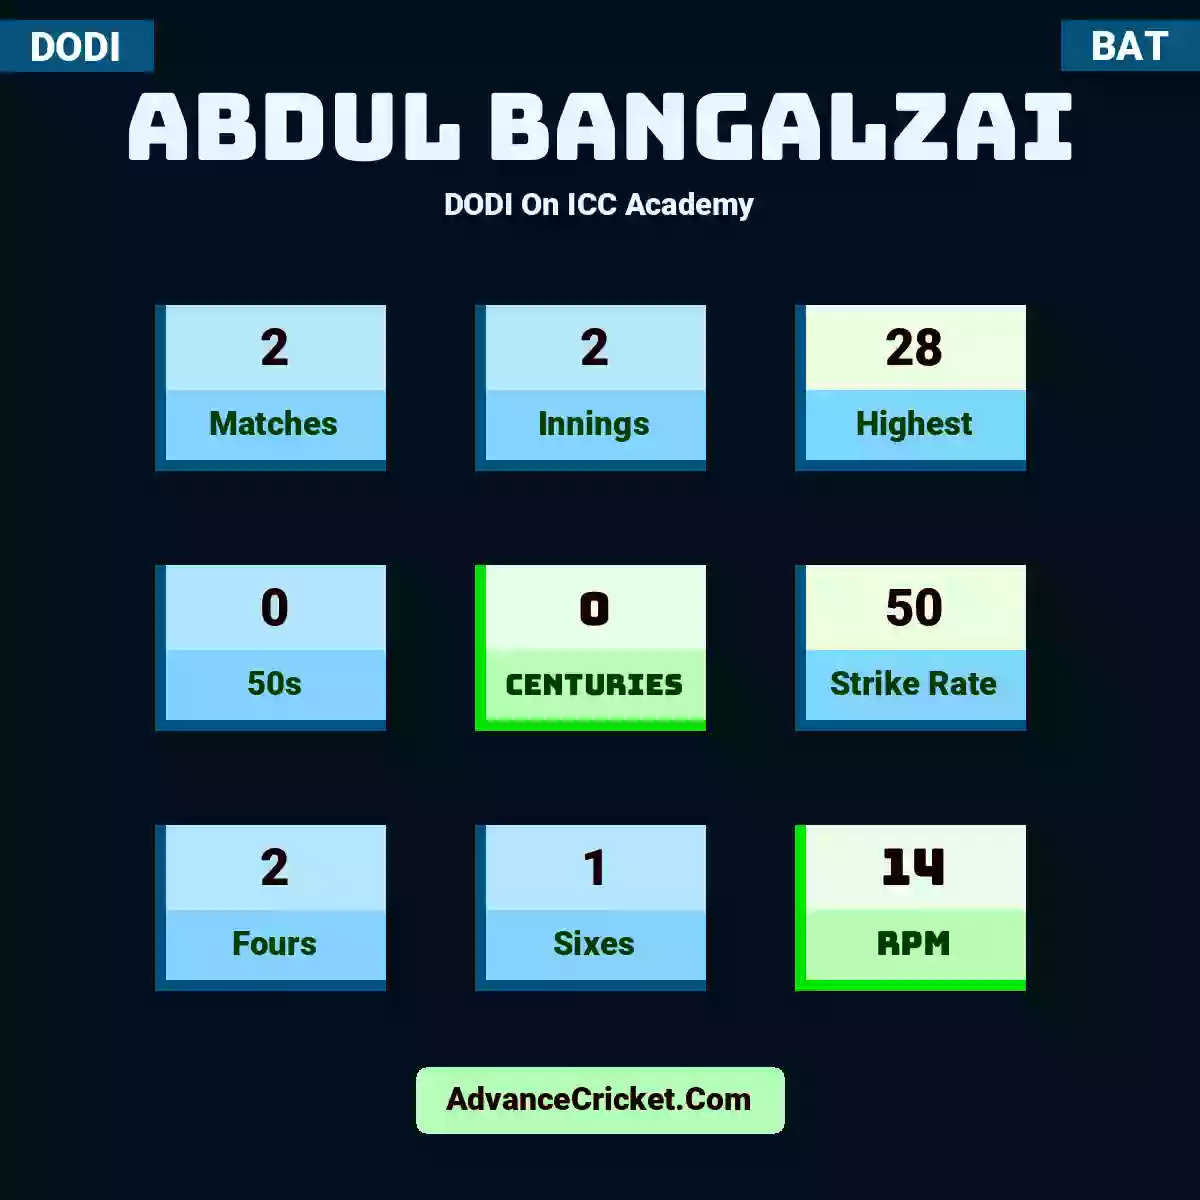 Abdul Bangalzai DODI  On ICC Academy, Abdul Bangalzai played 2 matches, scored 28 runs as highest, 0 half-centuries, and 0 centuries, with a strike rate of 50. A.Bangalzai hit 2 fours and 1 sixes, with an RPM of 14.